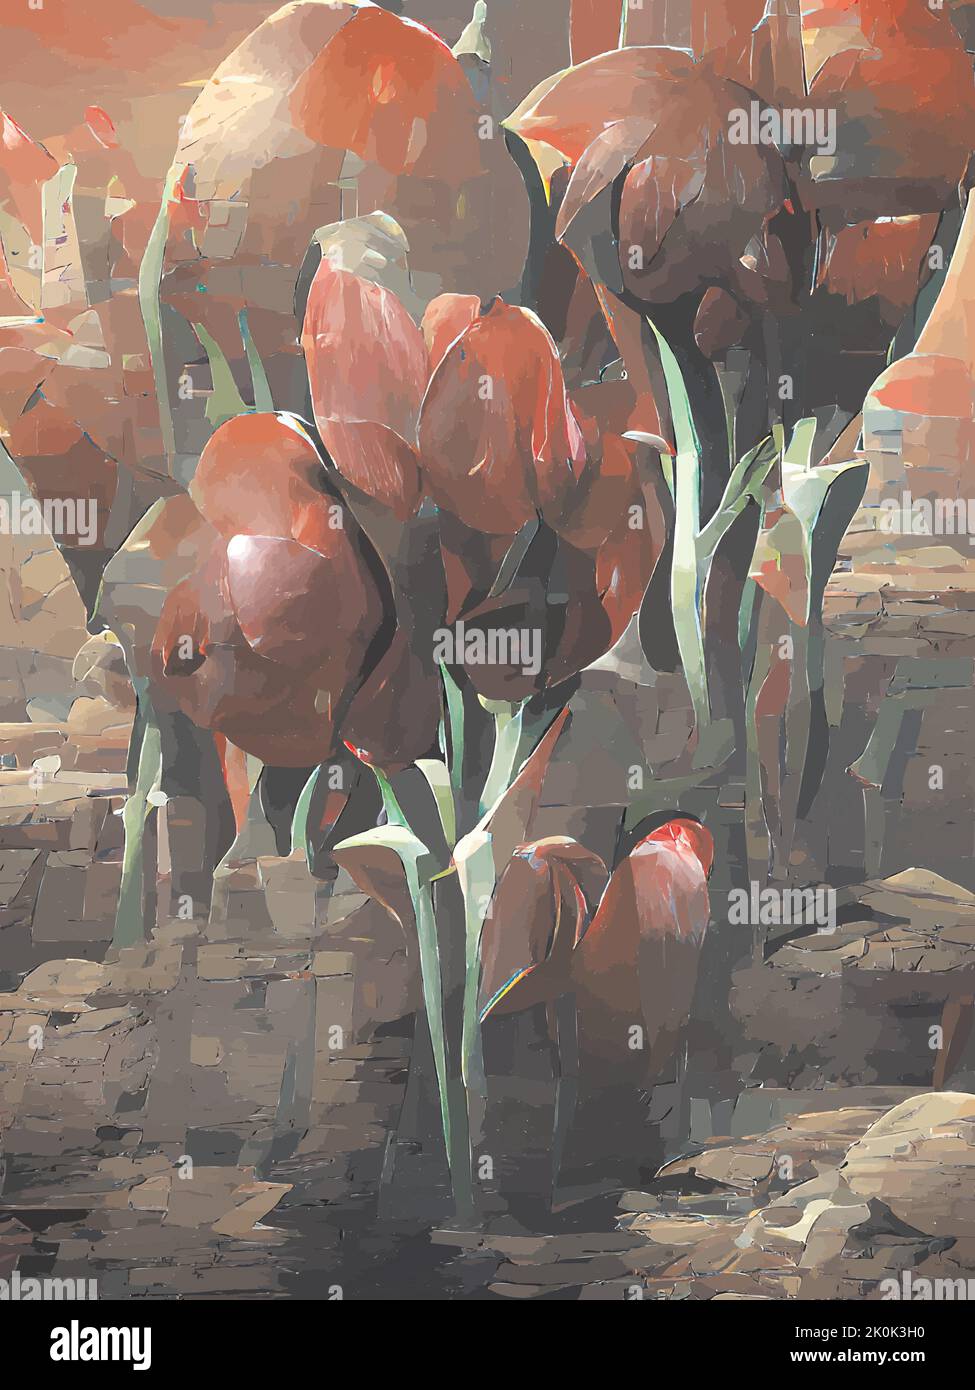 Eine digitale Kunst blühende Tulpen Malerei Hintergrund Stock Vektor